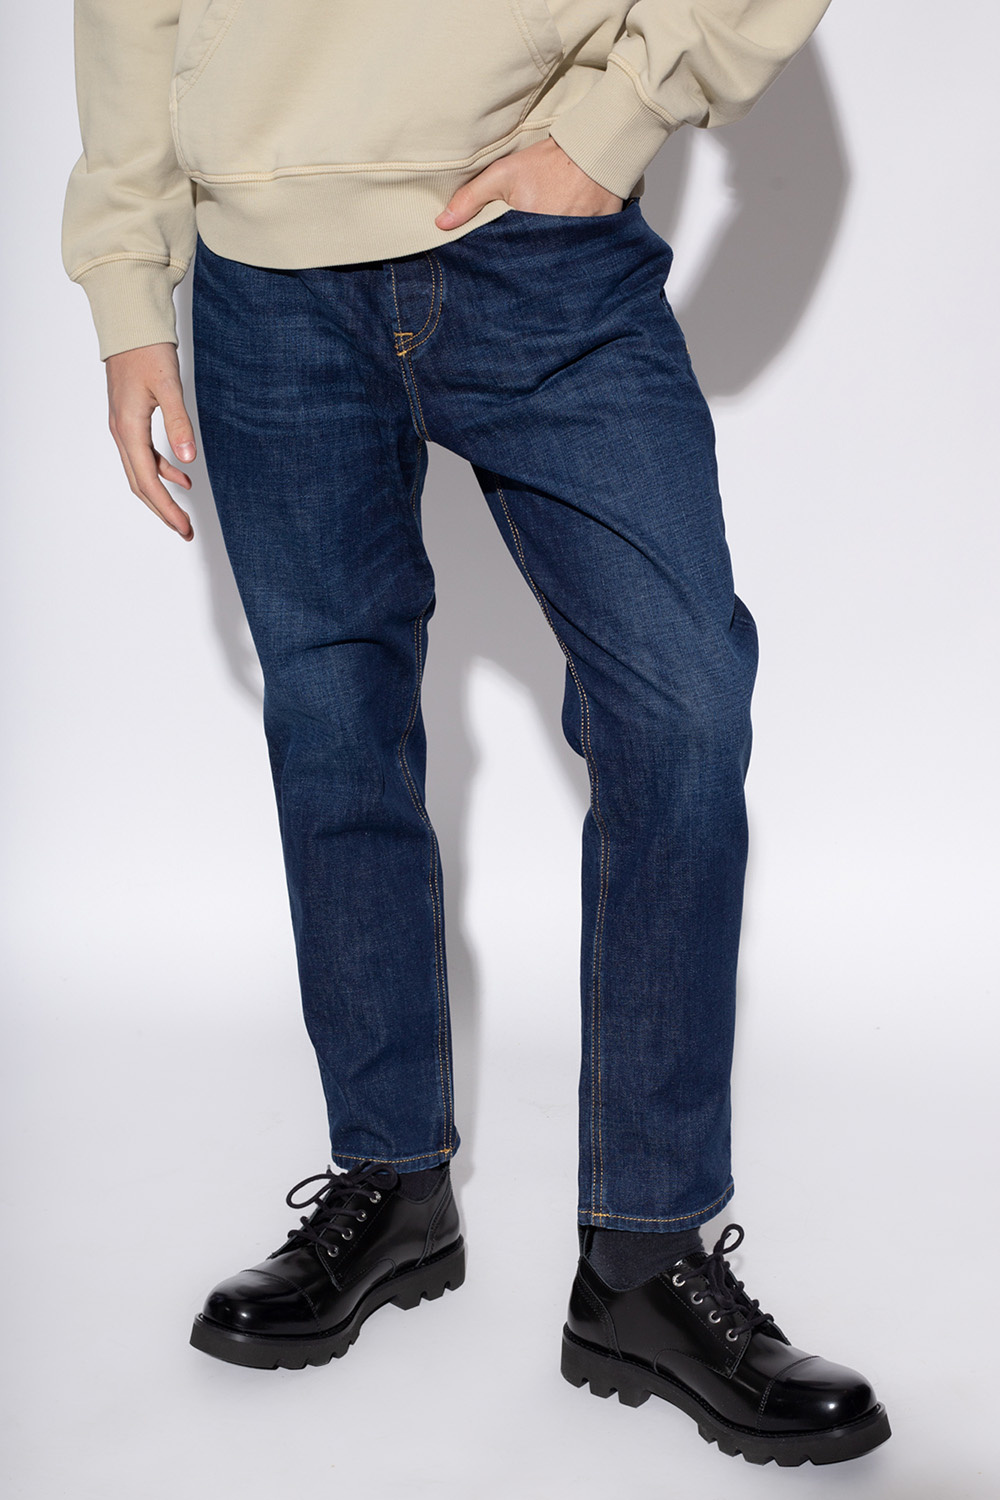 - | - jeans peplum Men\'s | Clothing \'D Fining\' bustier JmksportShops puffball dress Diesel